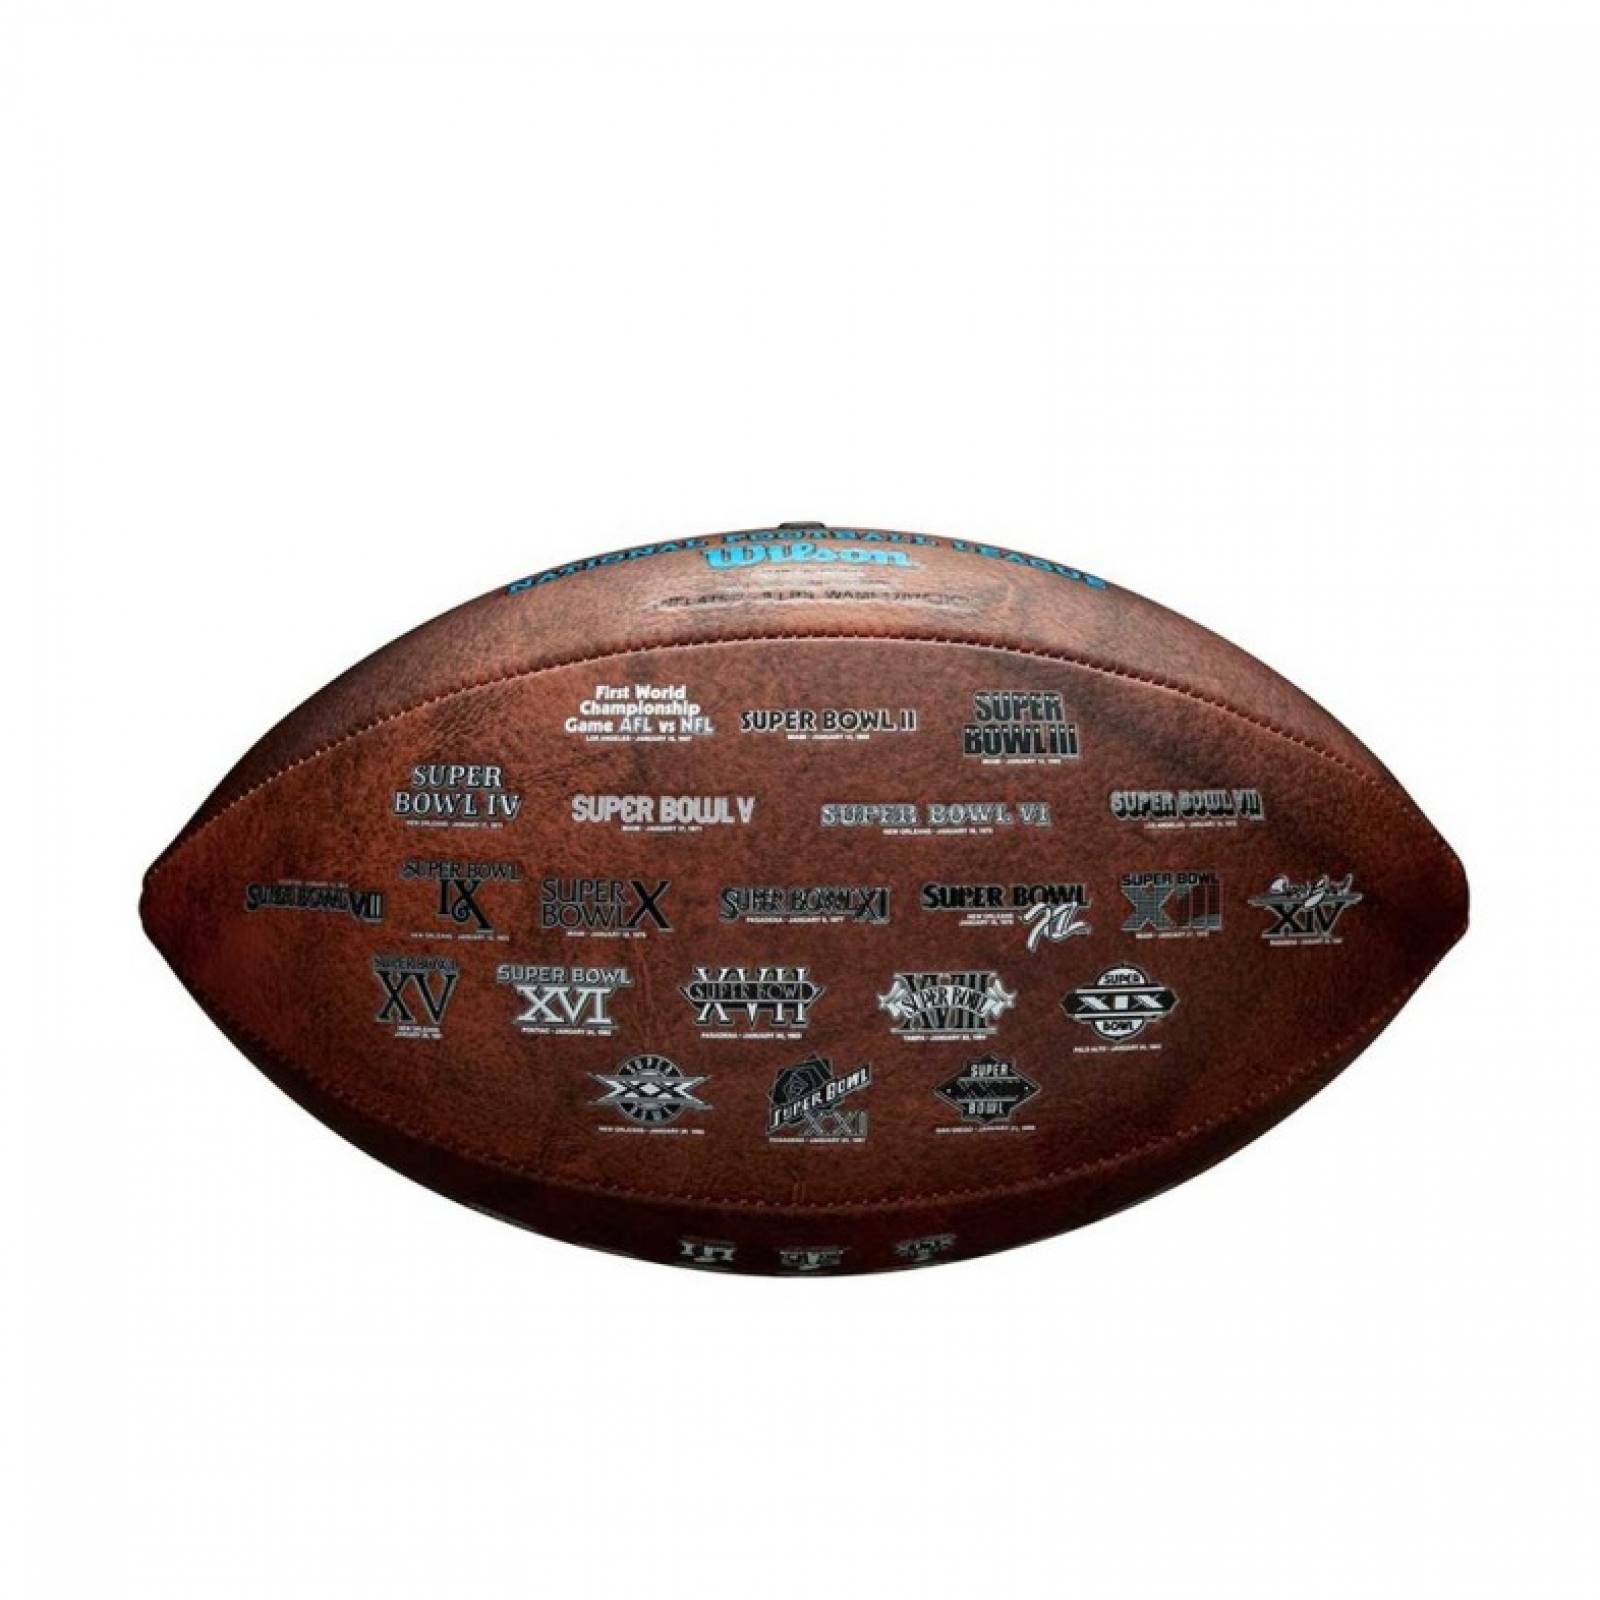 Balon Americano Conmemorativo Super Bowl 52 Piel Wilson